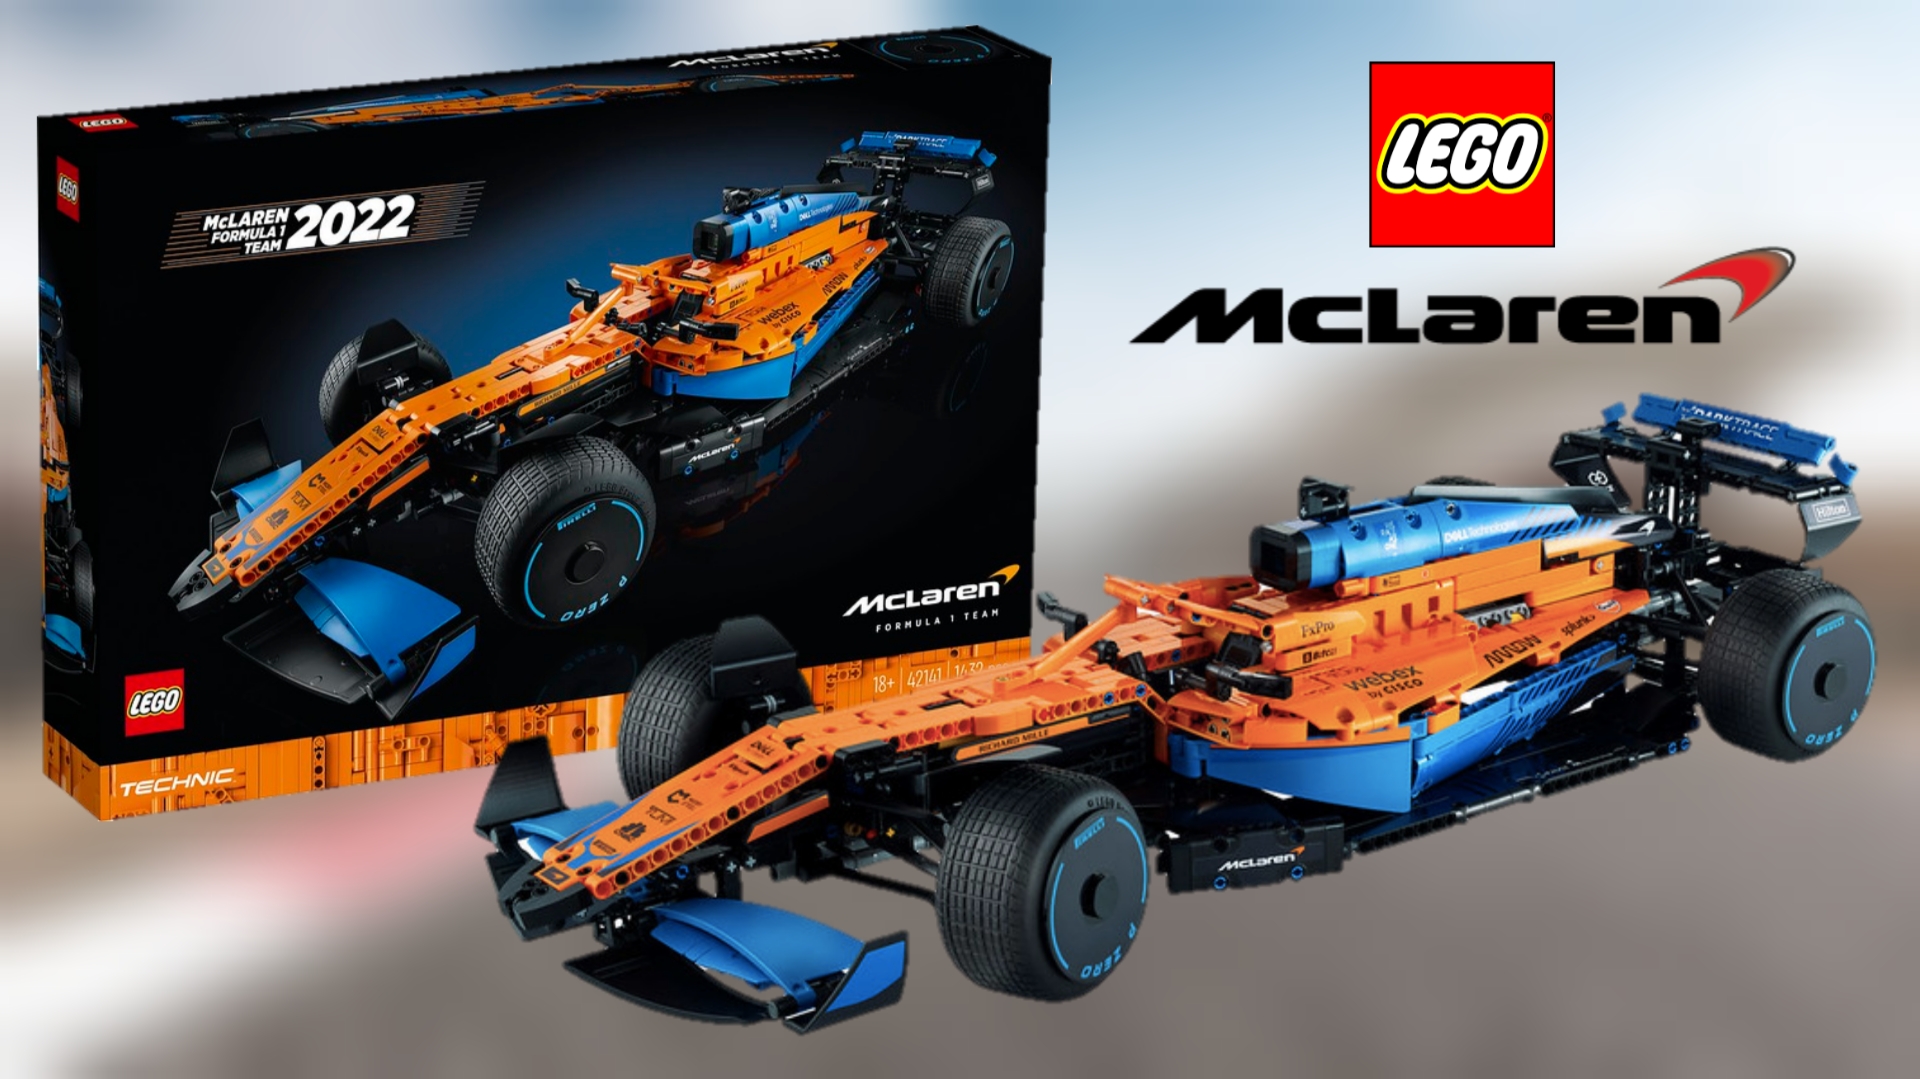 LEGO Technic McLaren F1 Race Car (42141) Officially Revealed! The